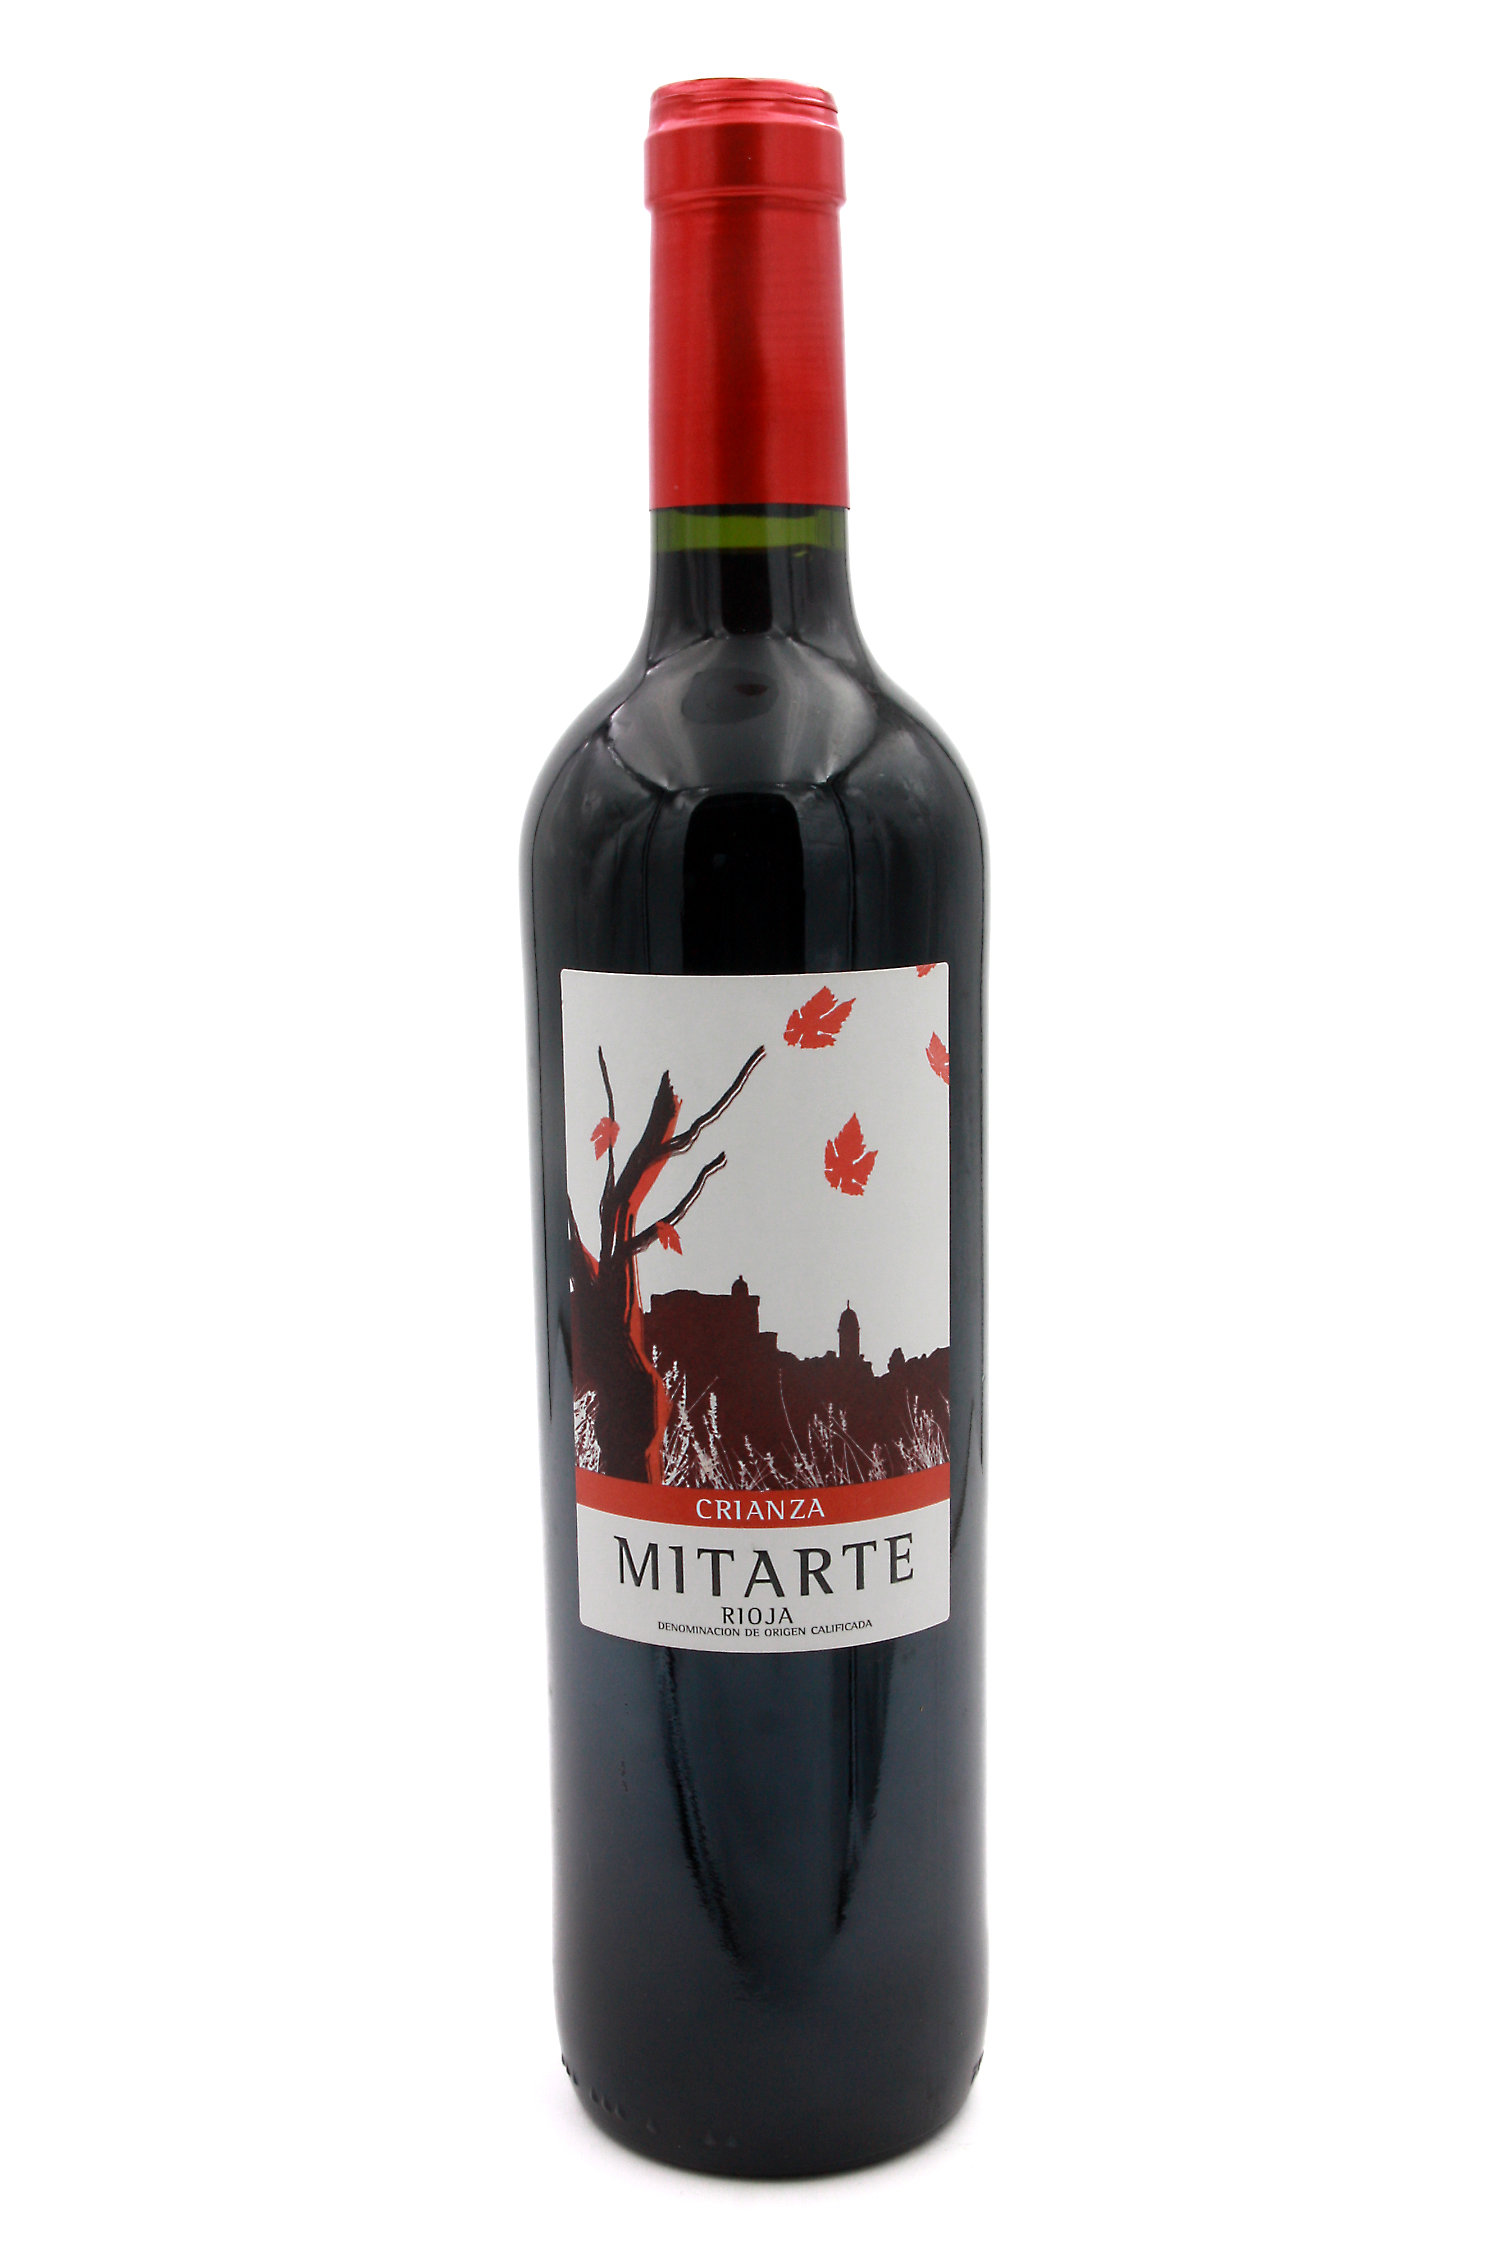 Mitarte - Rioja - Crianza rouge